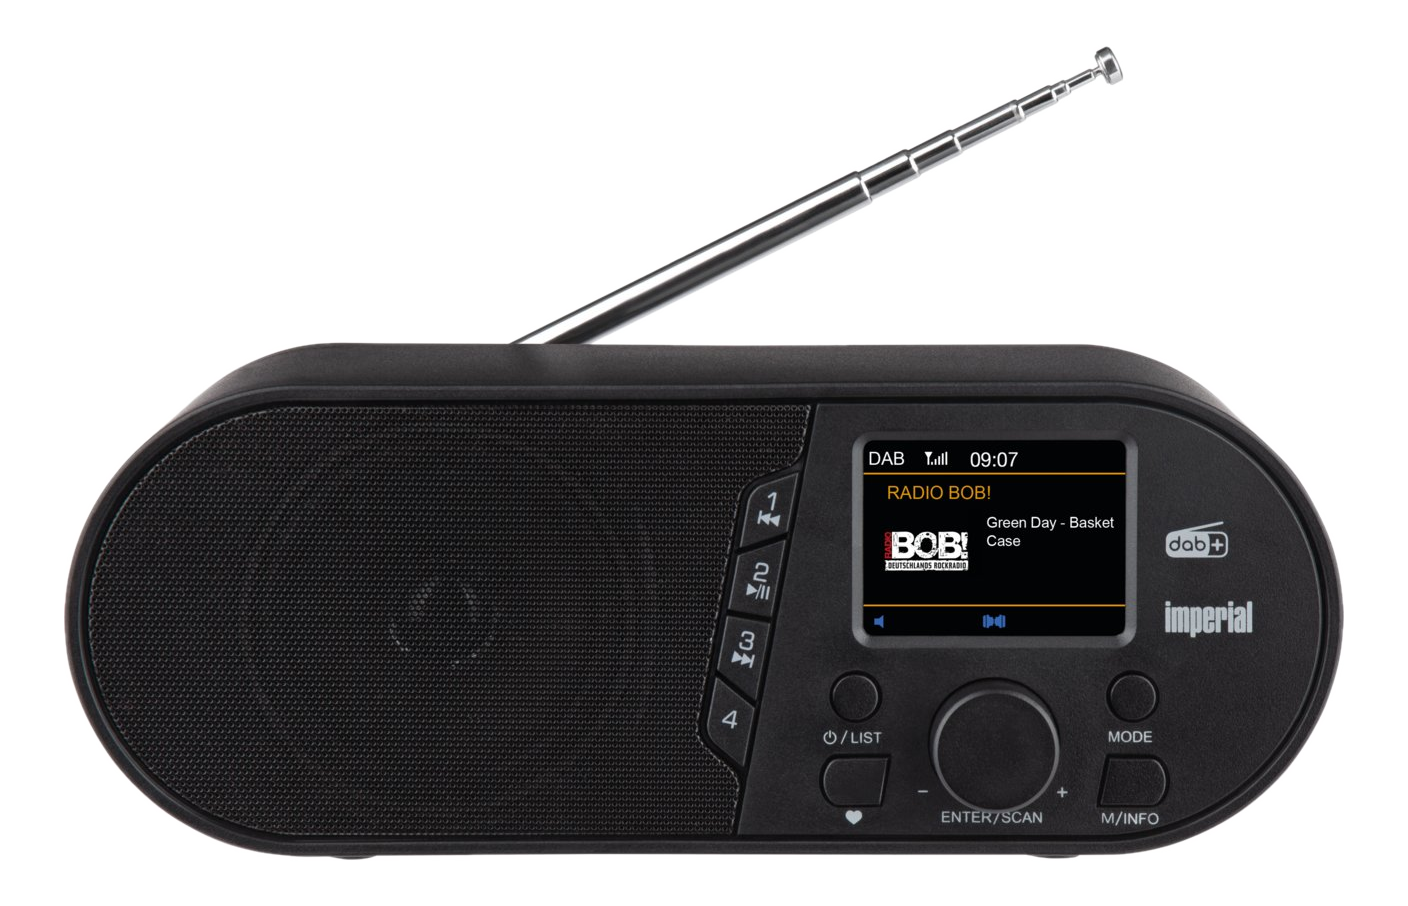 IMPERIAL DABMAN d105 - Radio DAB+/FM avec Bluetooth (DAB+, FM, Noir)